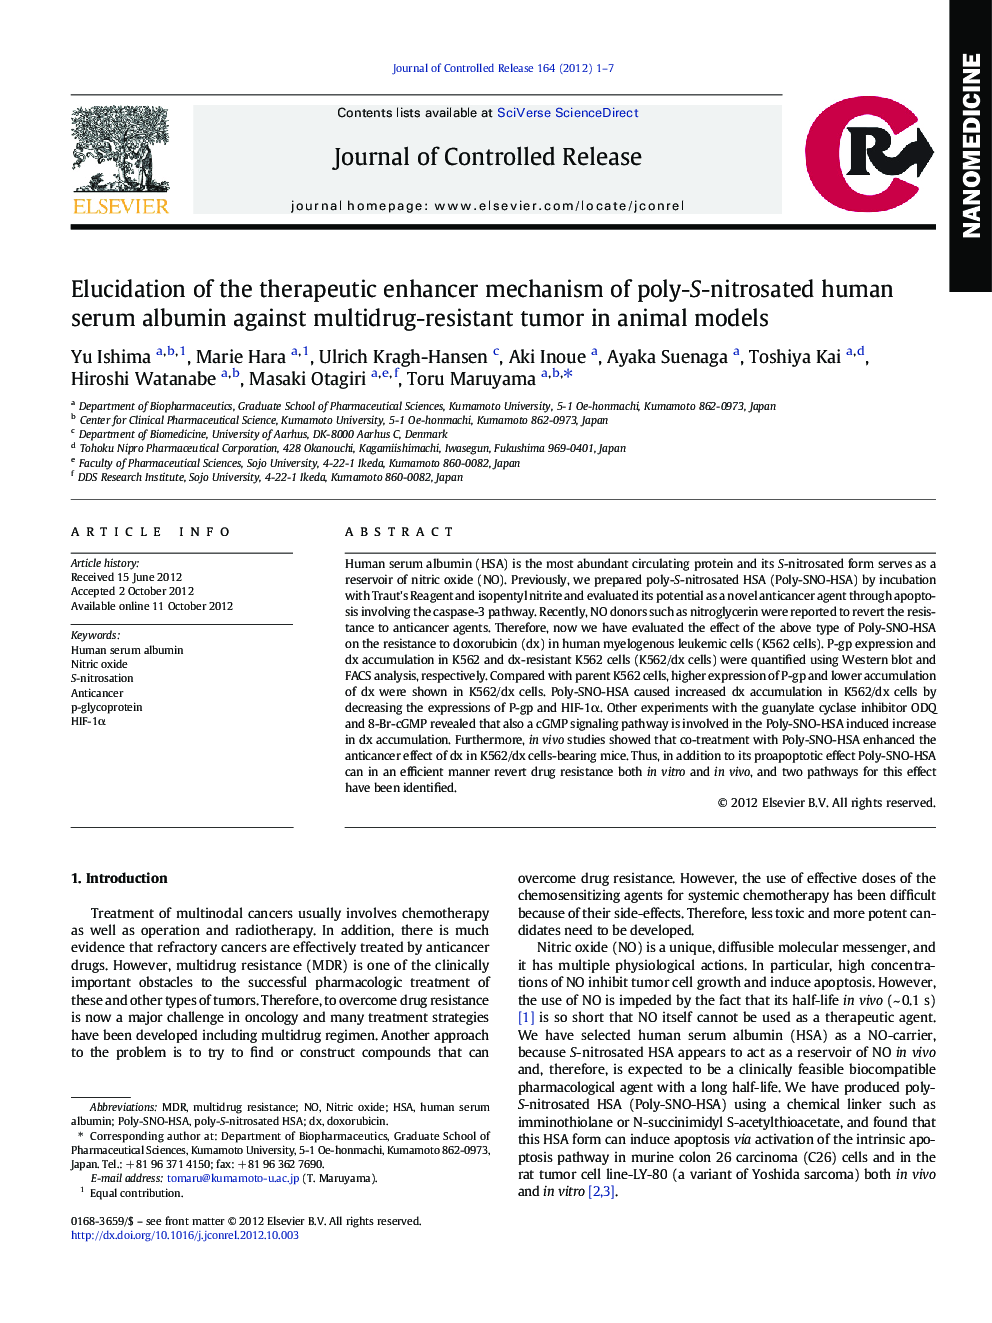 Elucidation of the therapeutic enhancer mechanism of poly-S-nitrosated human serum albumin against multidrug-resistant tumor in animal models